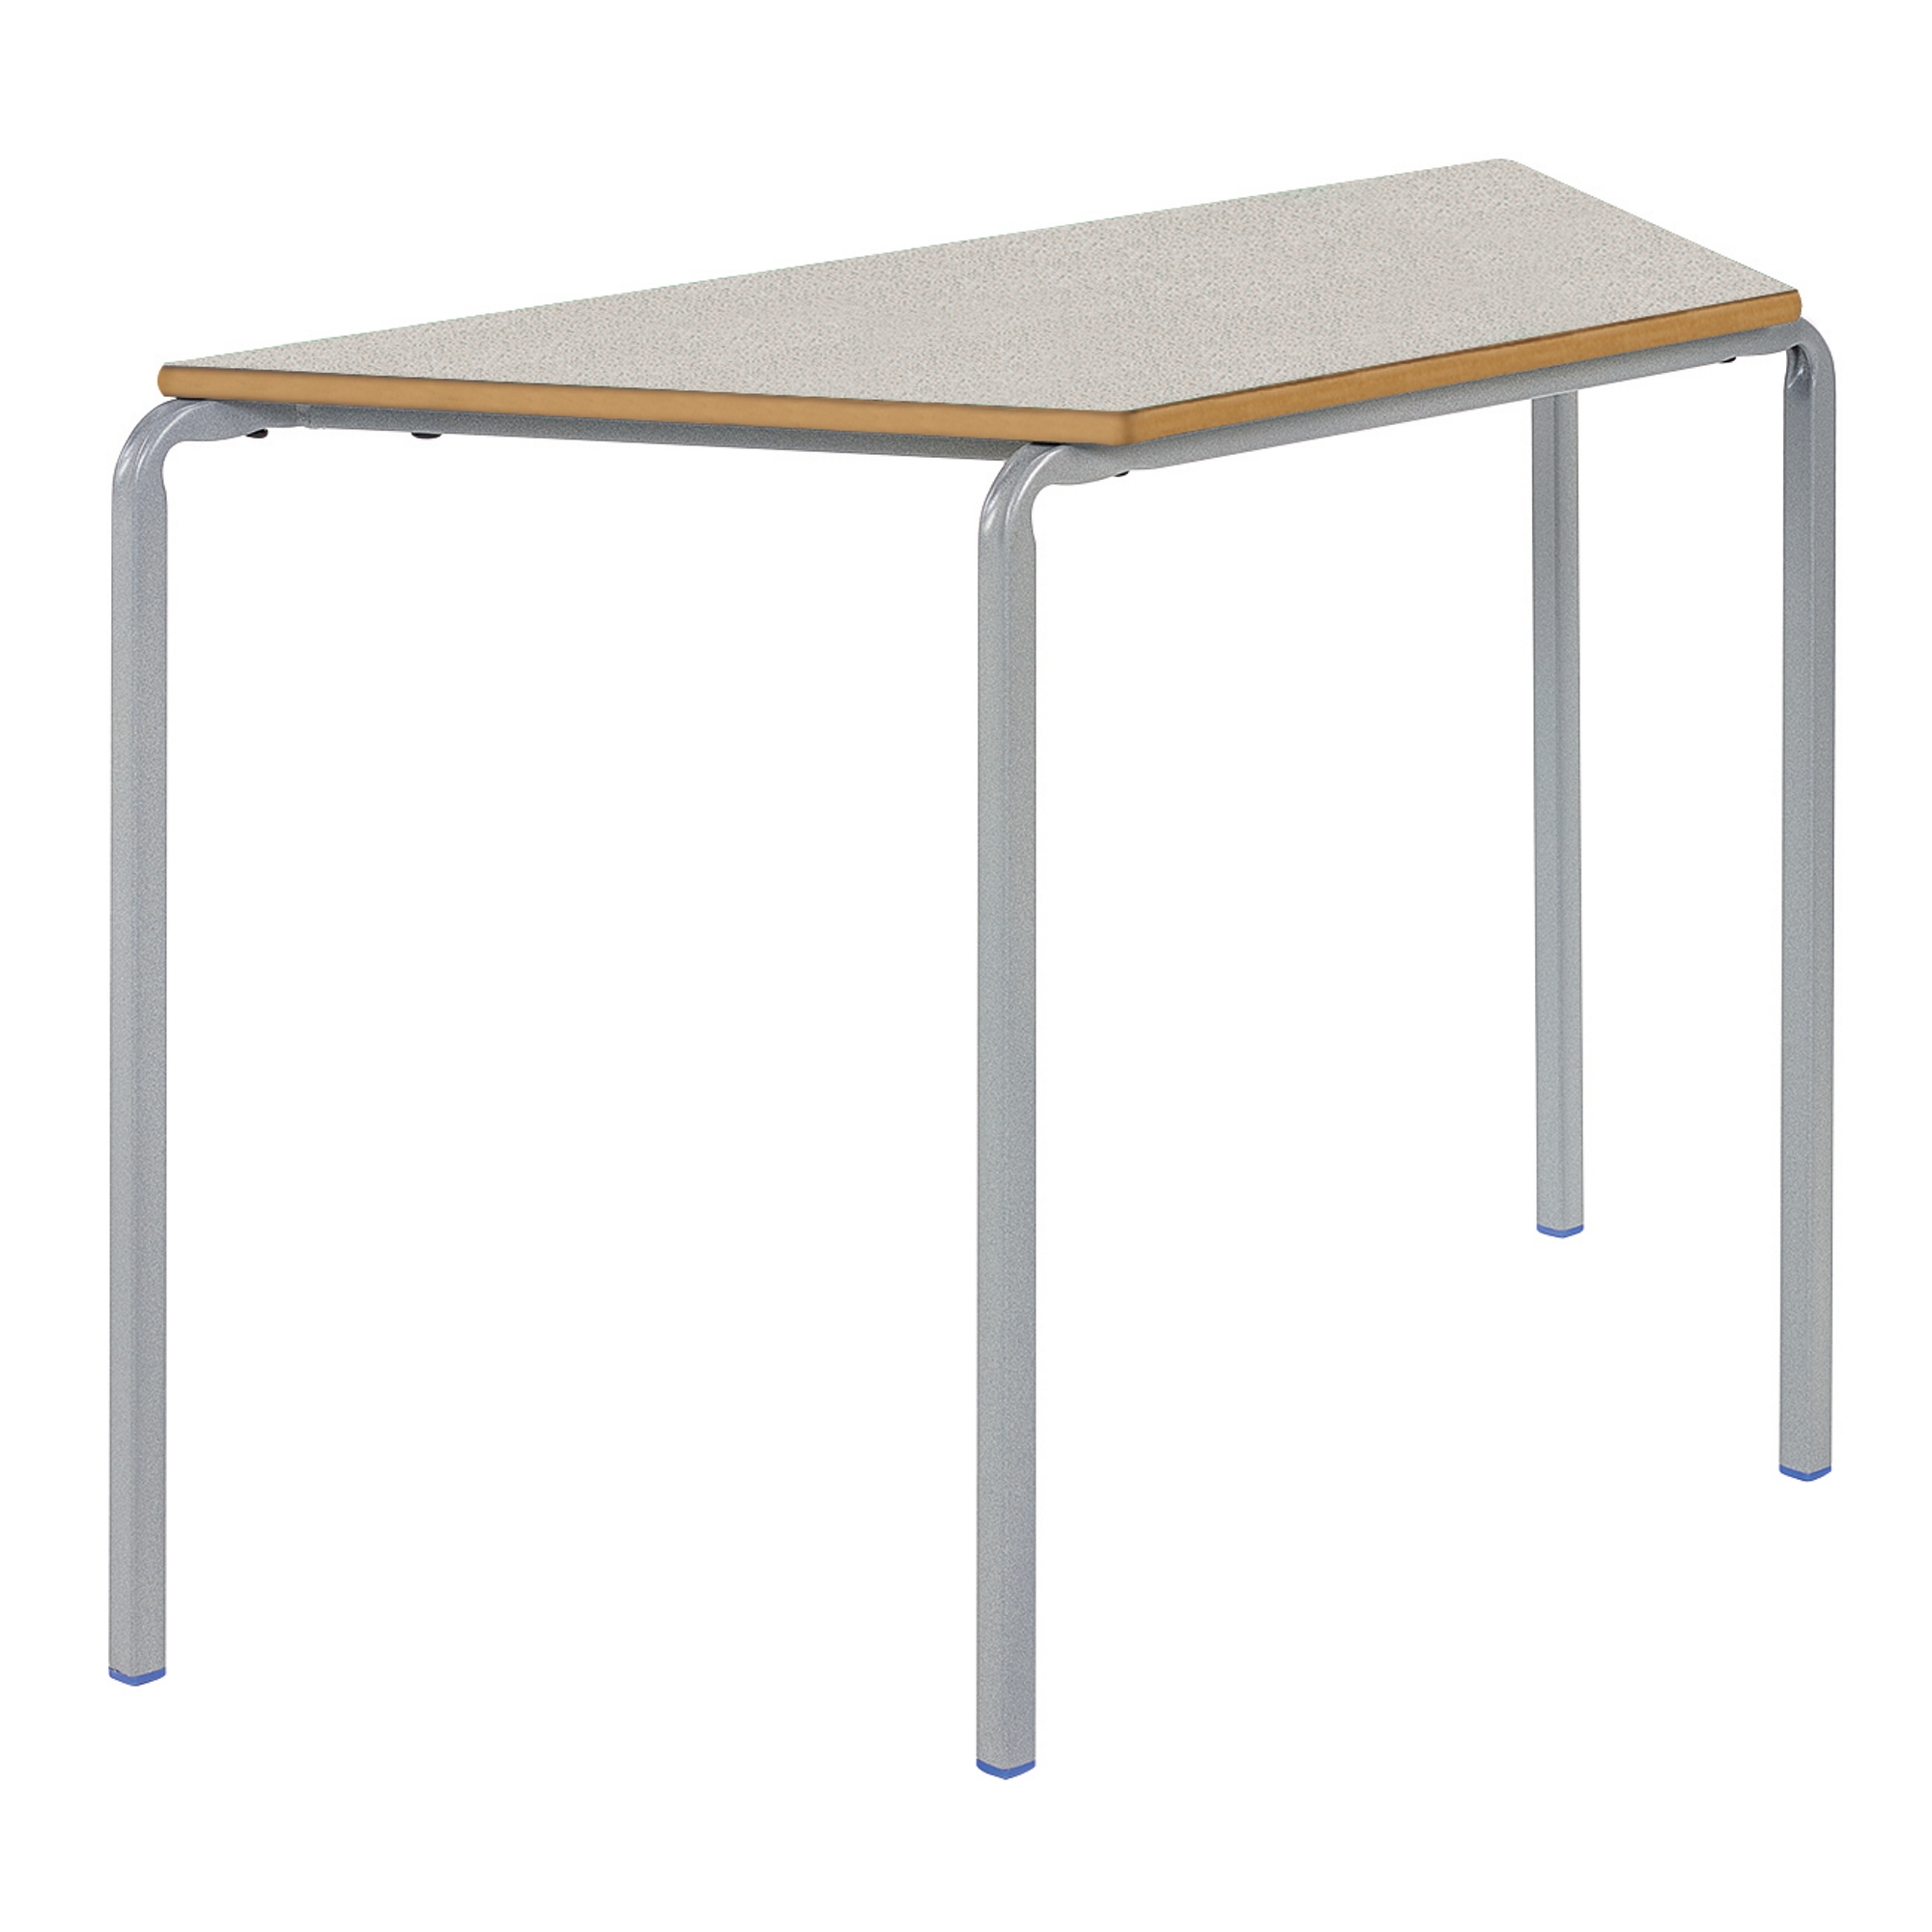 Classmates Trapezoidal Crushed Bent Classroom Table - 1100 x 550 x 710mm - Ailsa